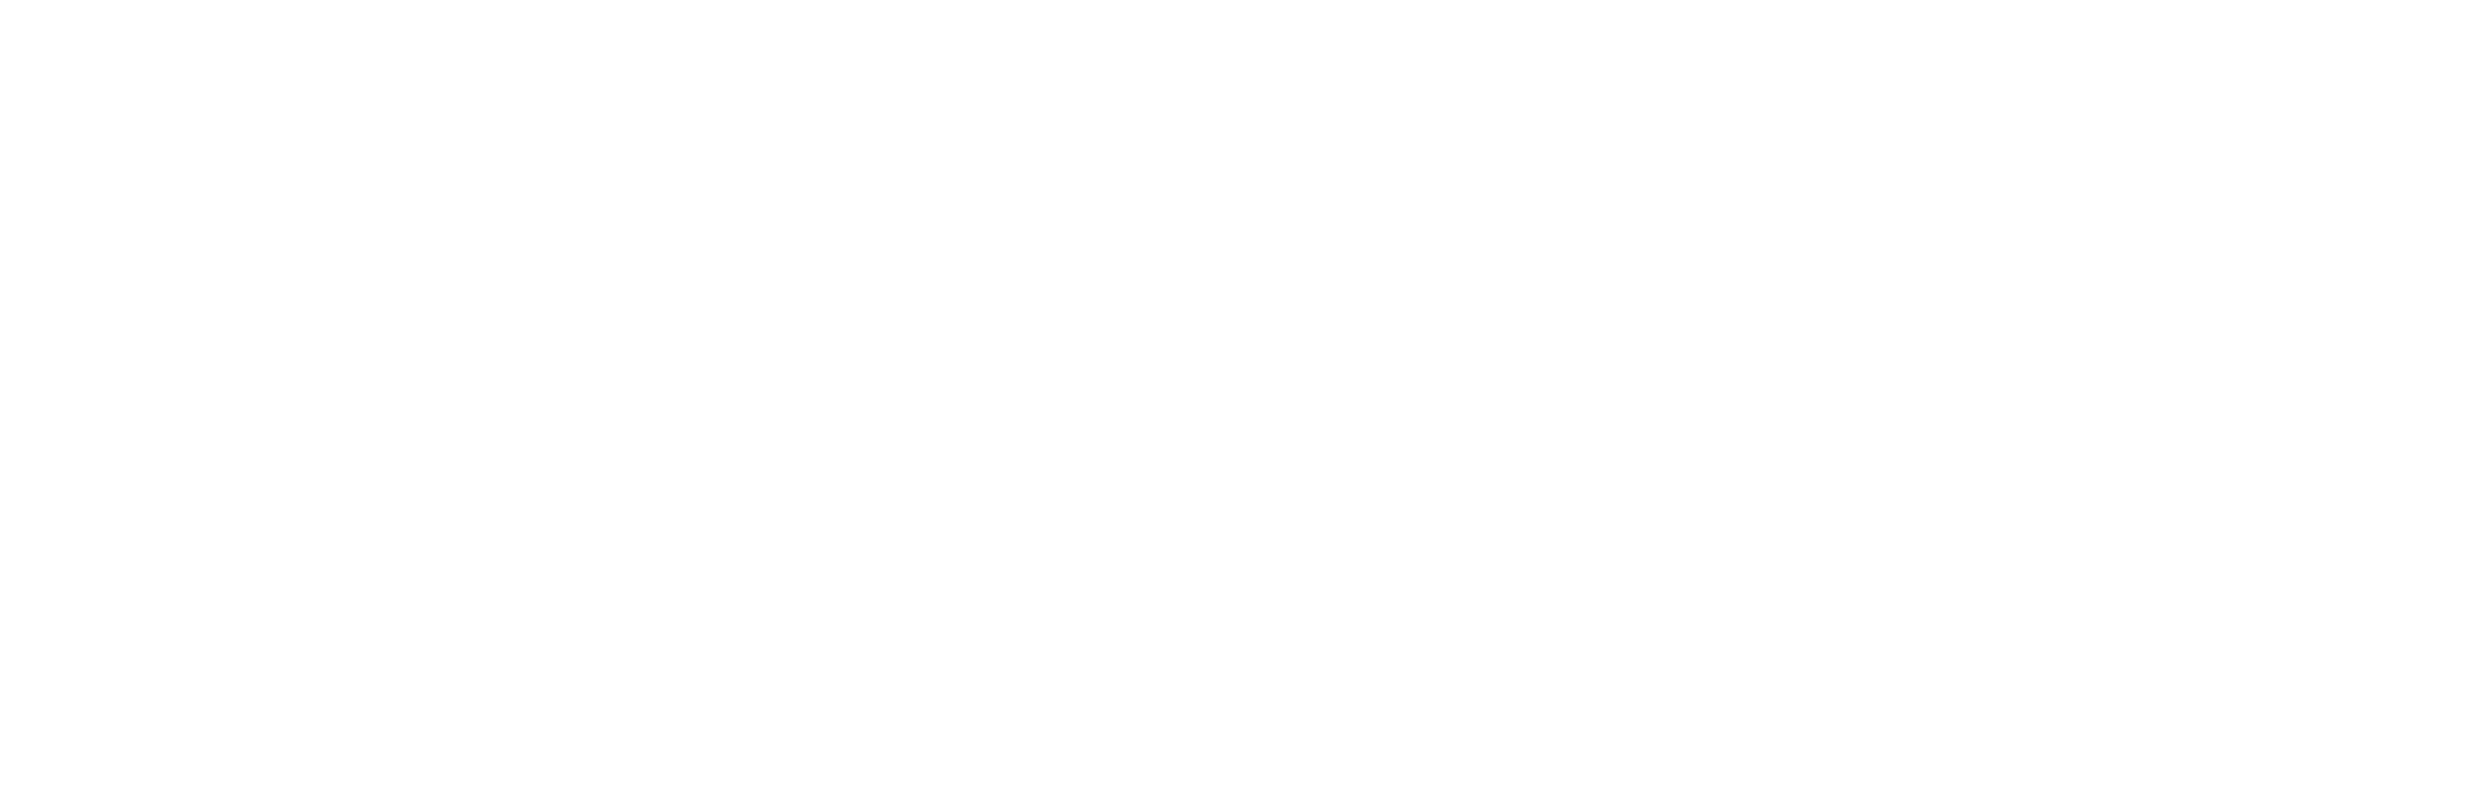 Dcode Group logo.